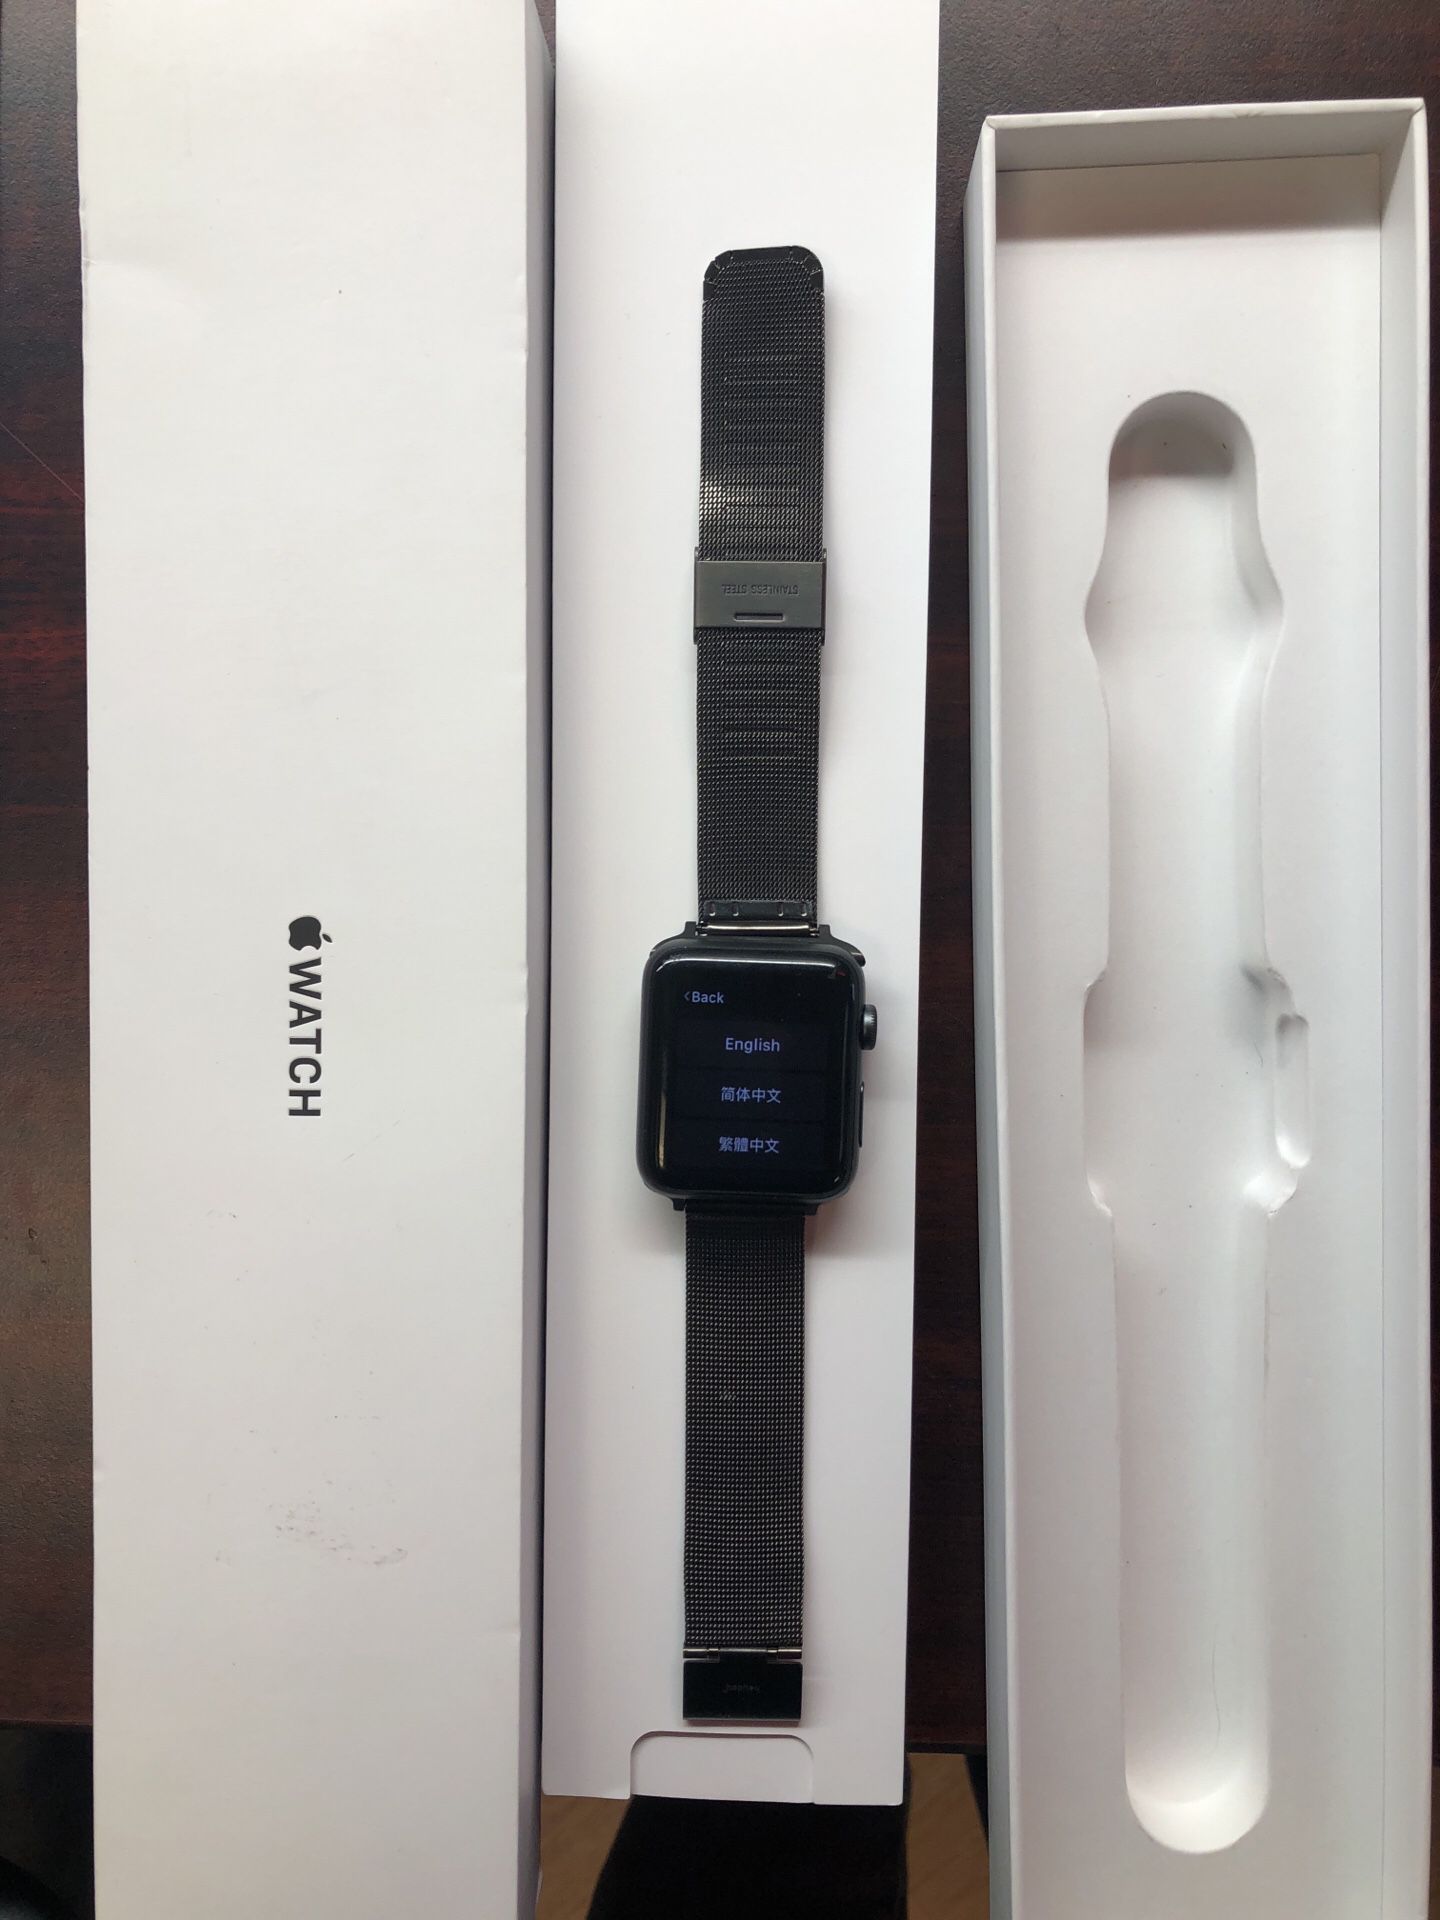 Series 3 Apple Watch 42 MM $290$